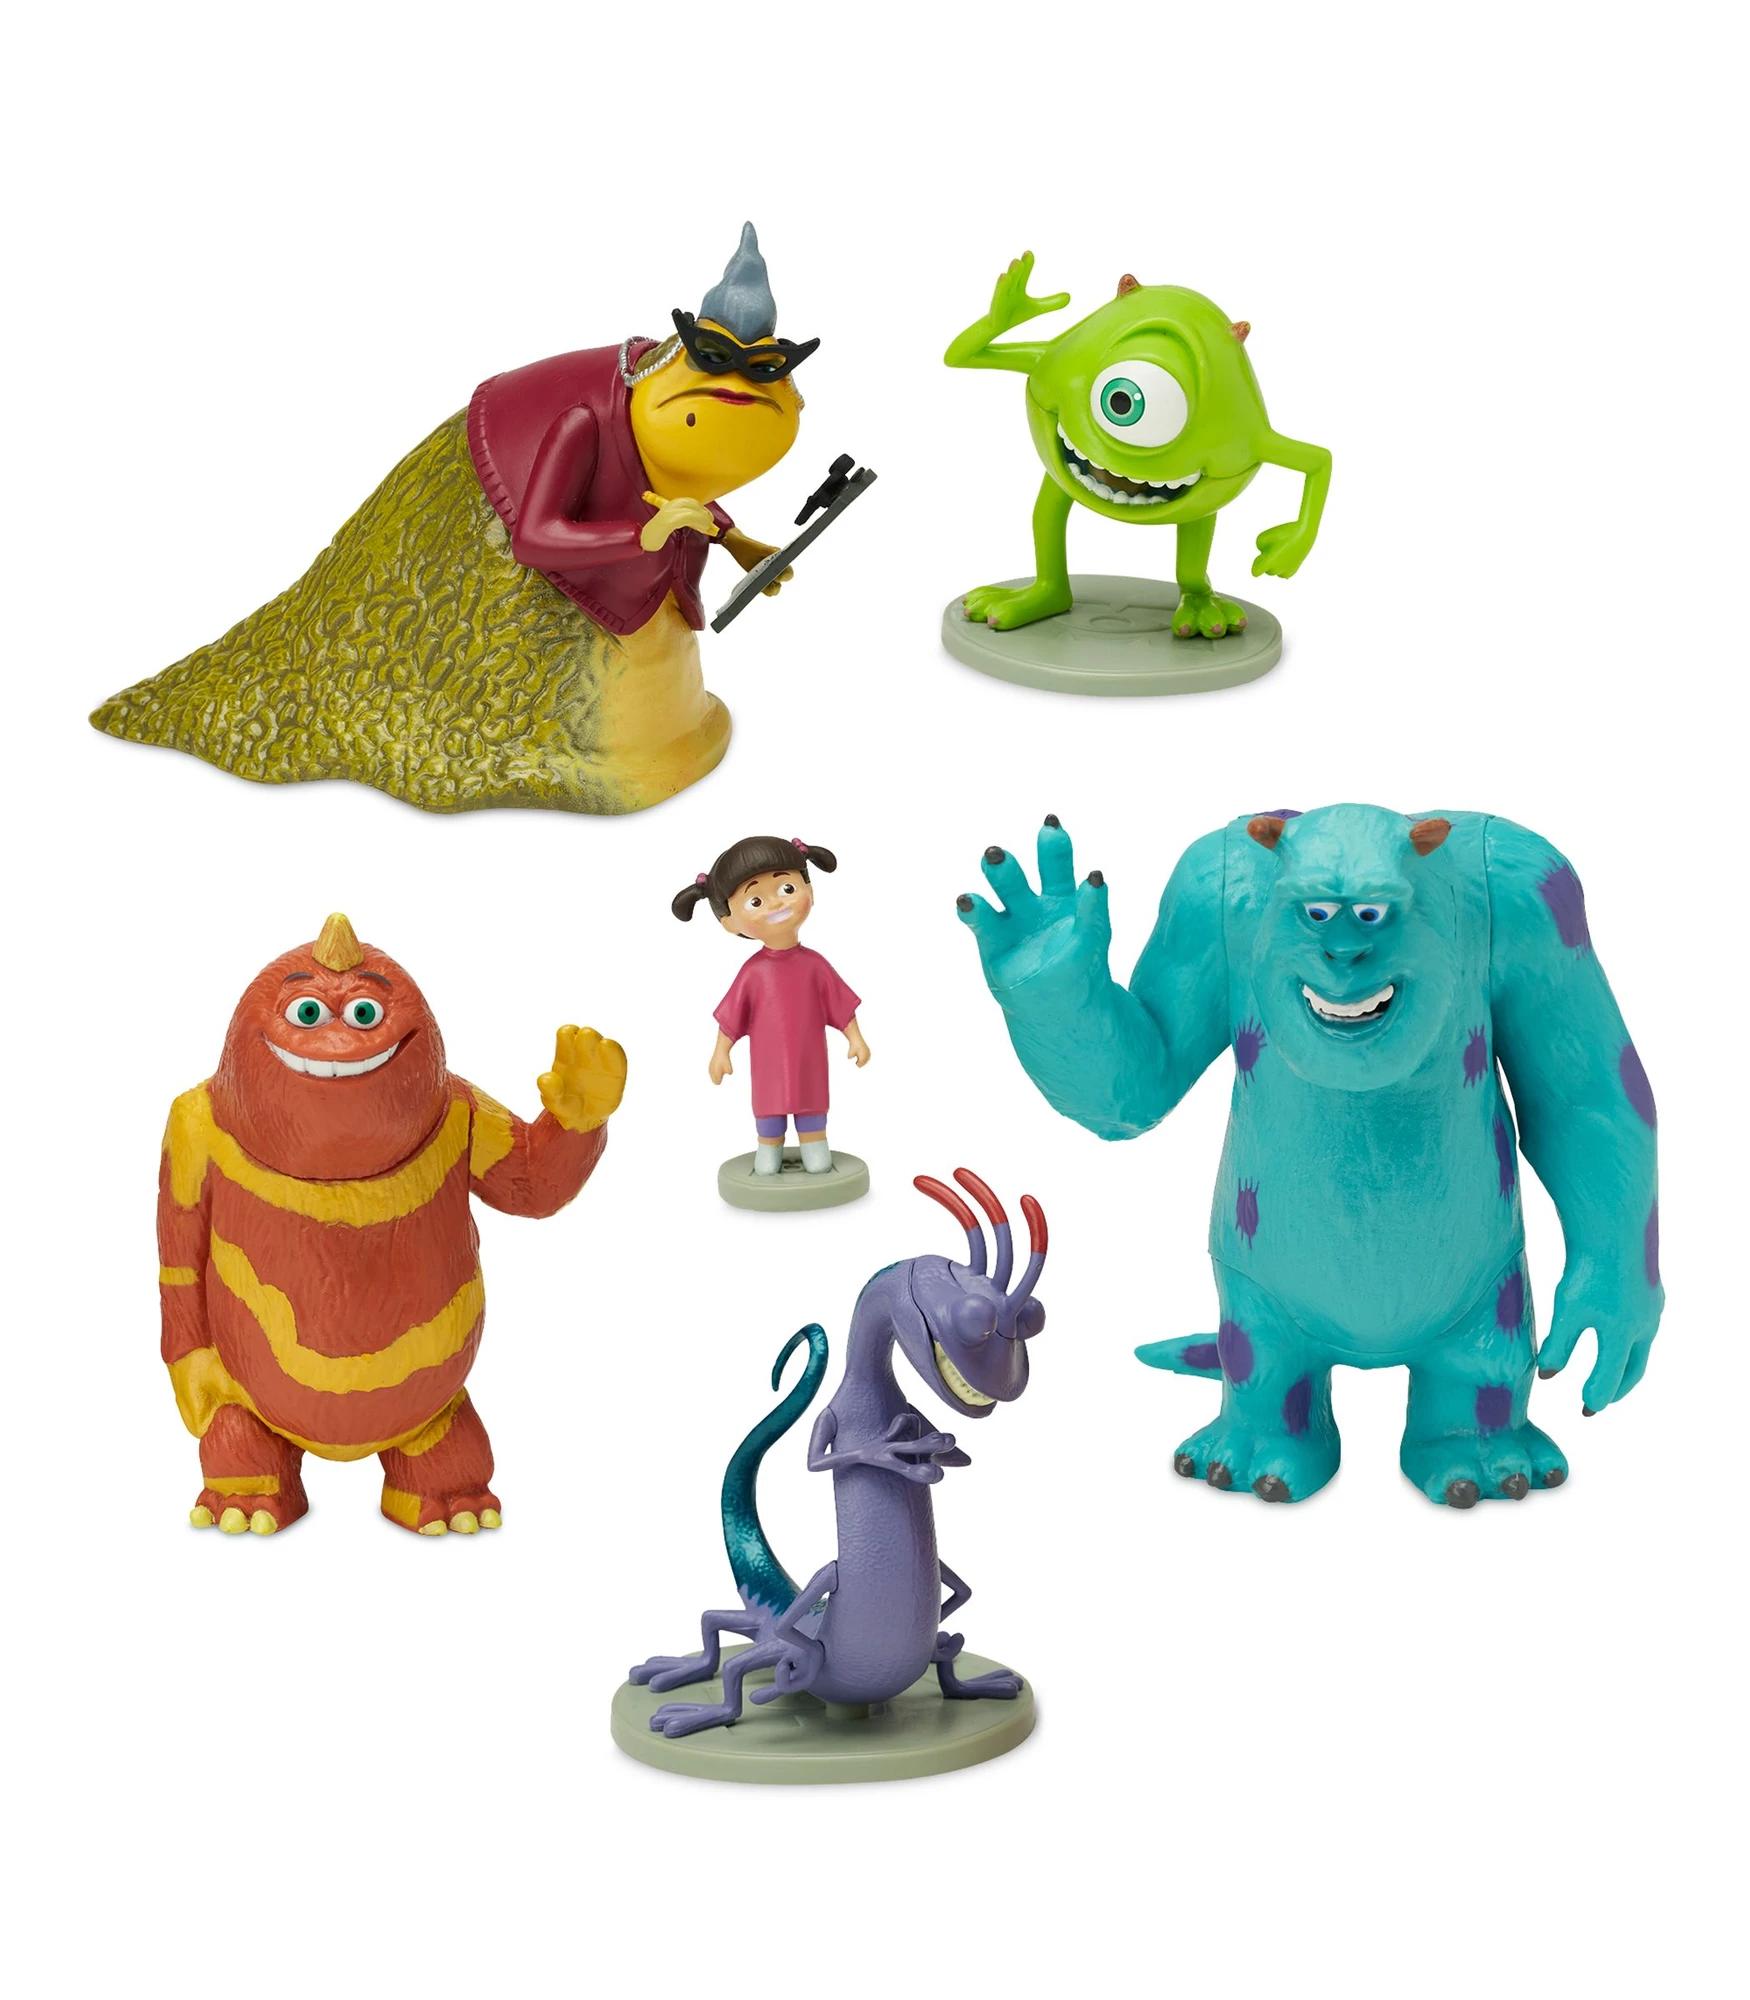 Beast Kingdom MEA-039 Disney Pixar Monsters, Inc. Series Set 6-in-1 Bu –  Beast Kingdom SEA